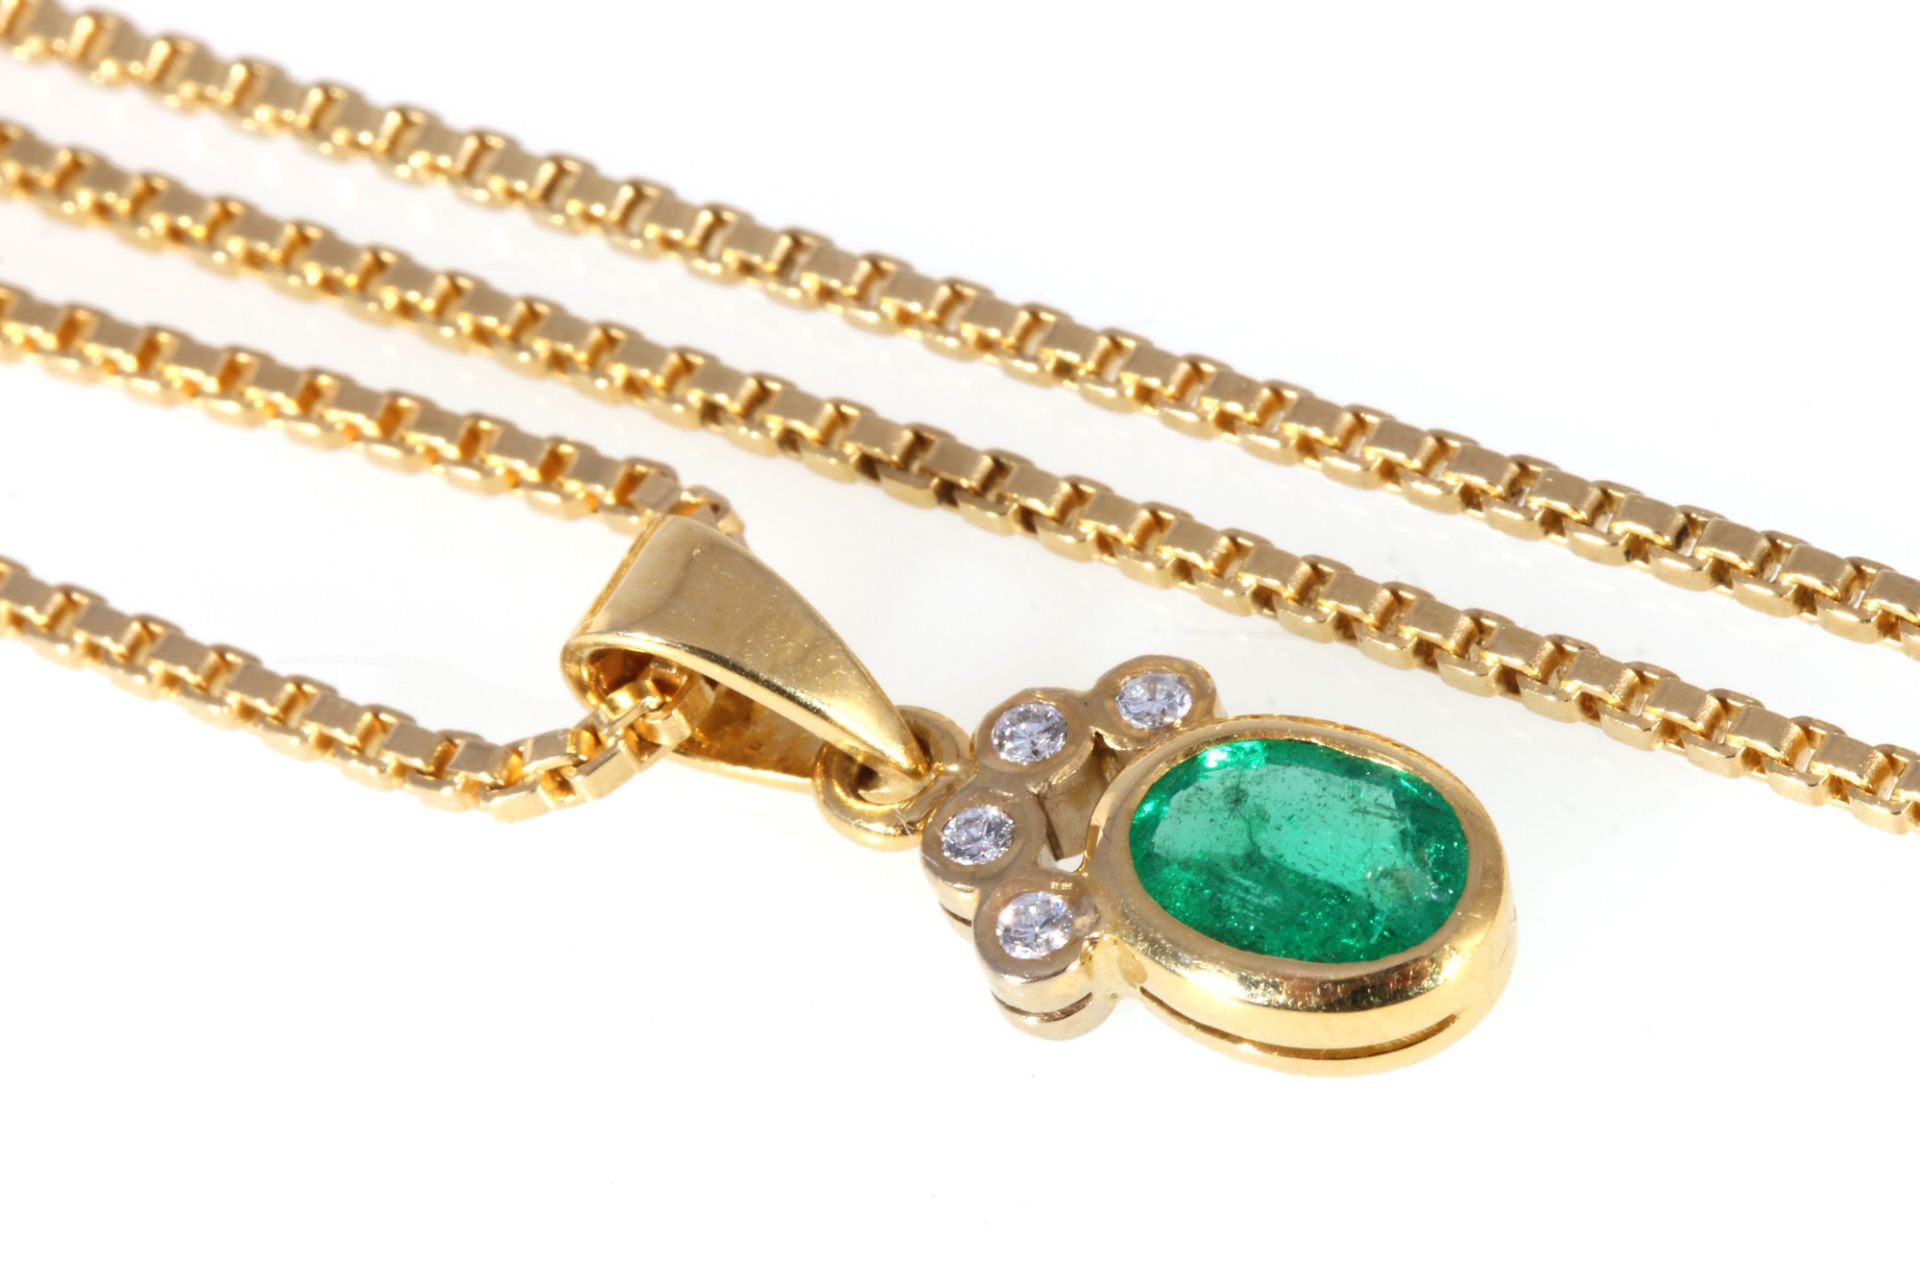 750 gold emerald diamond pendant with 750 gold necklace, 18K Gold Smaragd Brillanten Anhänger mit 18